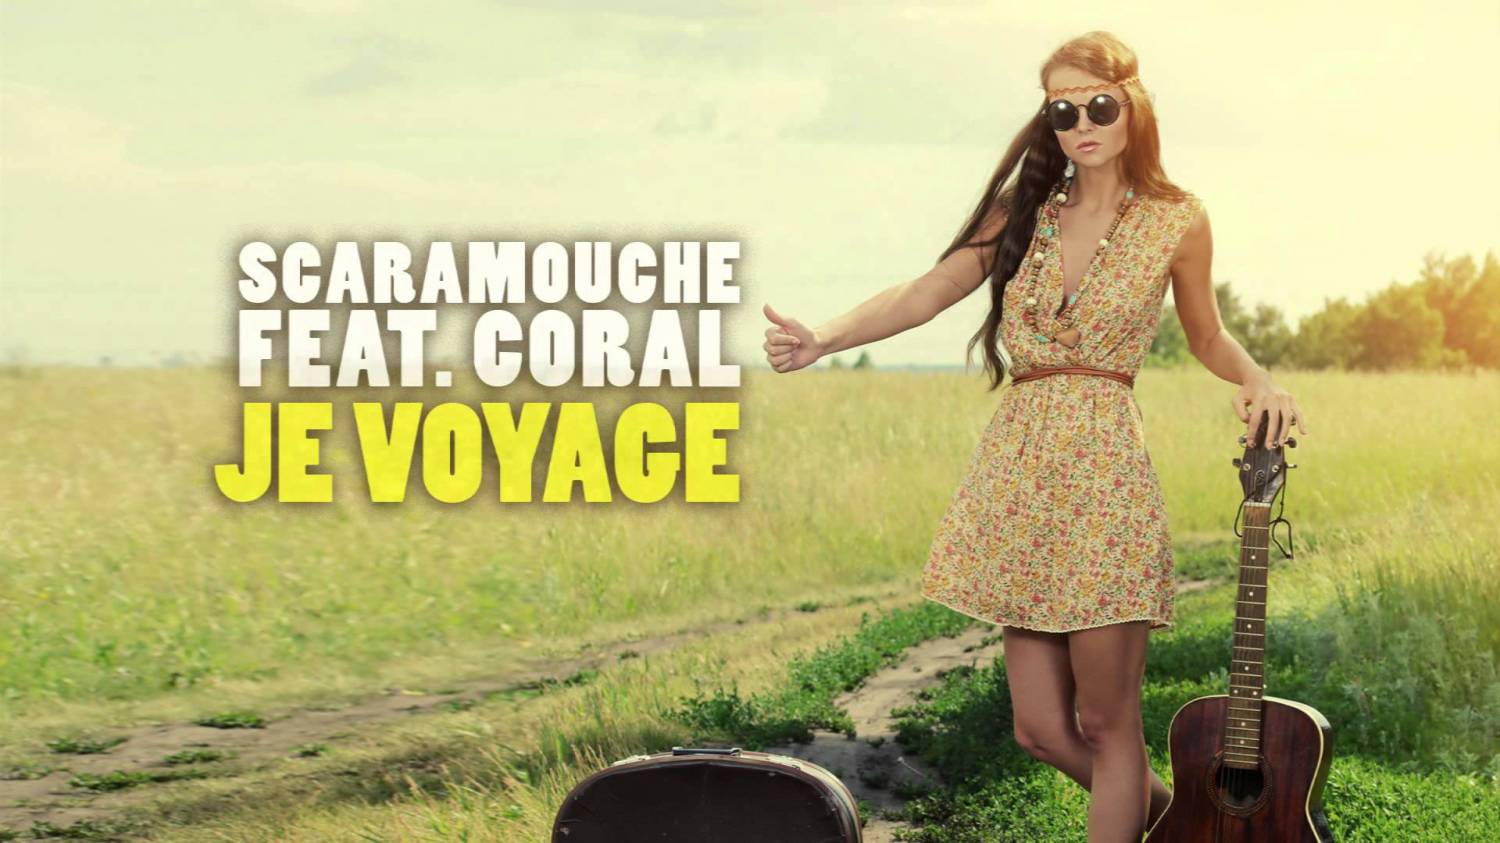 Scaramouche feat. Voyage mp3. Voyage Voyage mp3. Манга Scaramouche feat Coral. Веселые путешествия песня